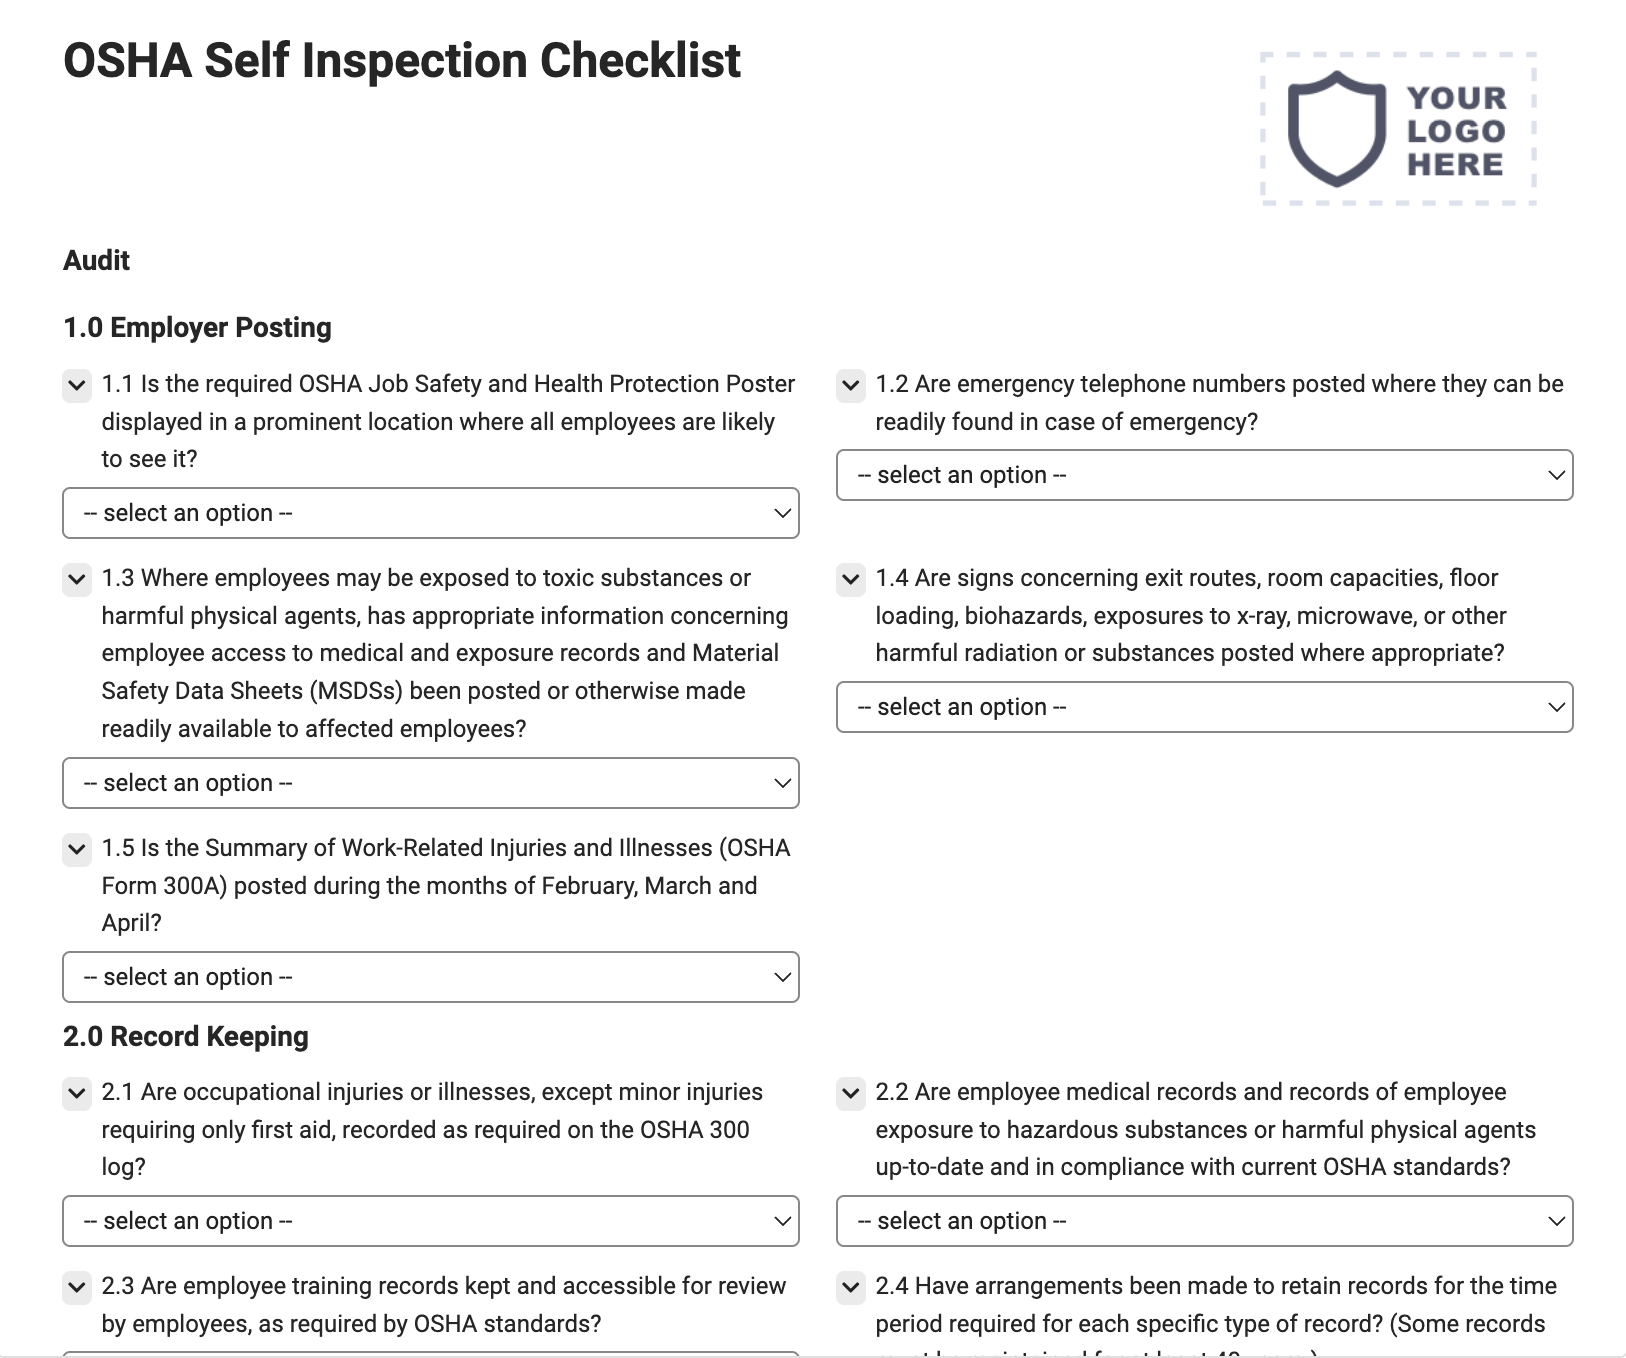 OSHA Self Inspection Checklist